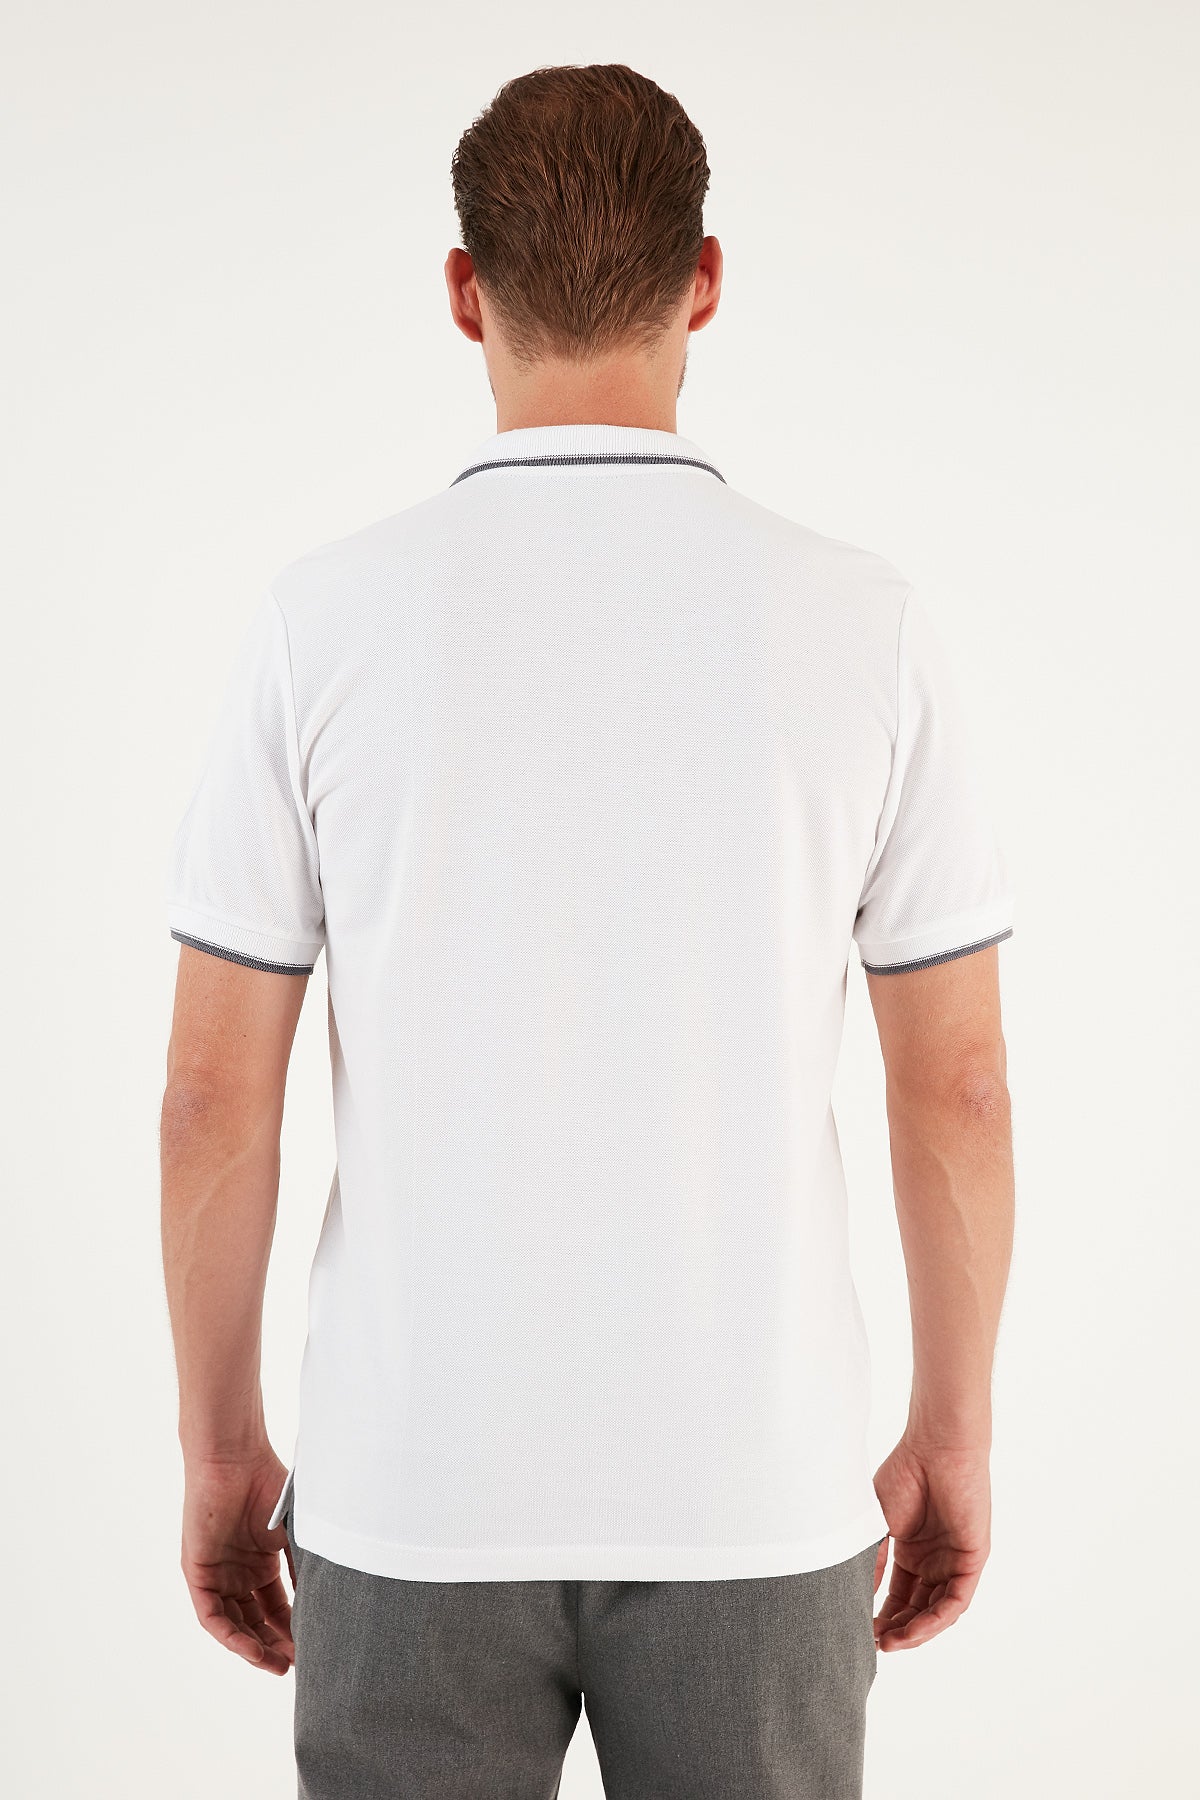 Buratti % 100 Pamuk Düğmeli Slim Fit Erkek Polo T Shirt 5902118 BEYAZ